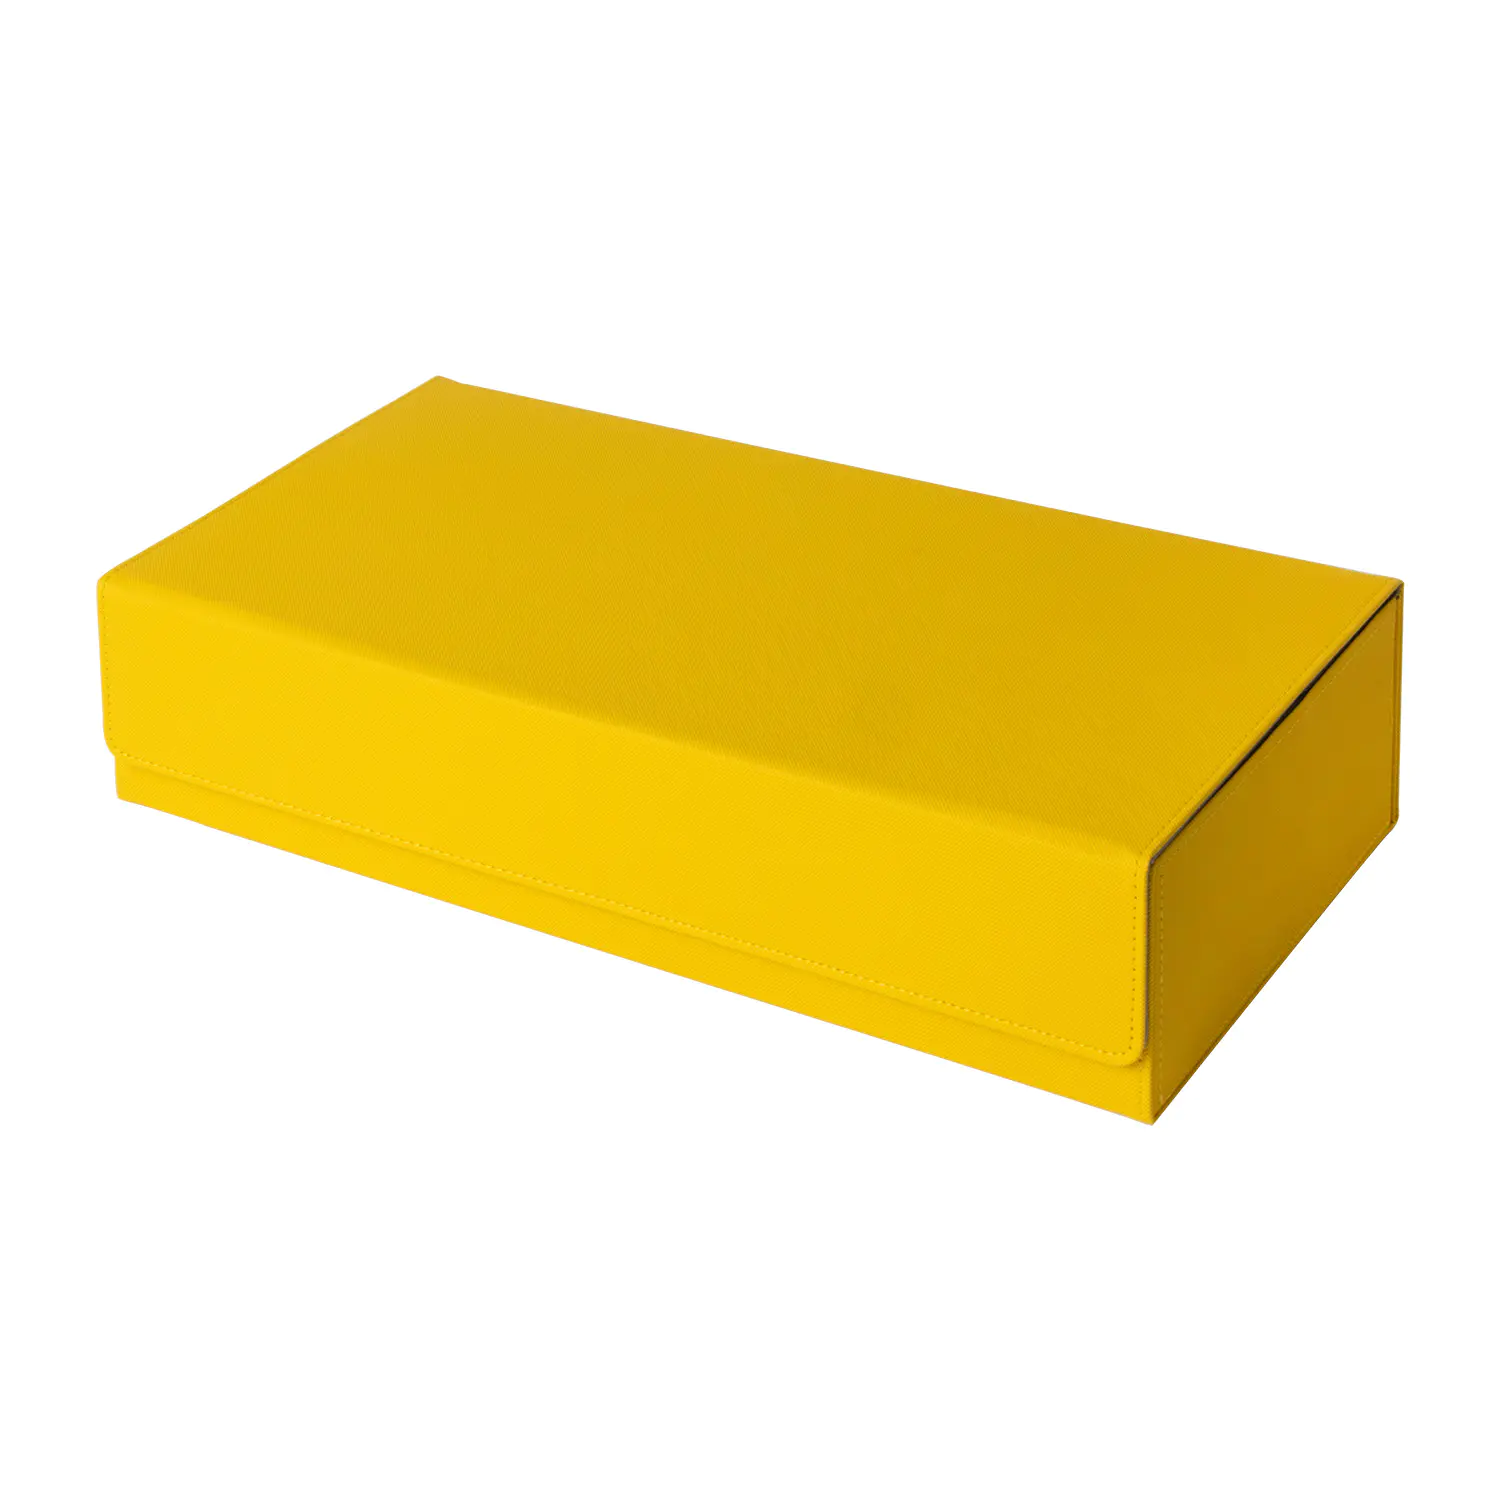 550 Premium PU Leather Deck Kad Kes Pelindung Kad Pelindung Kotak Penyimpanan - Kuning